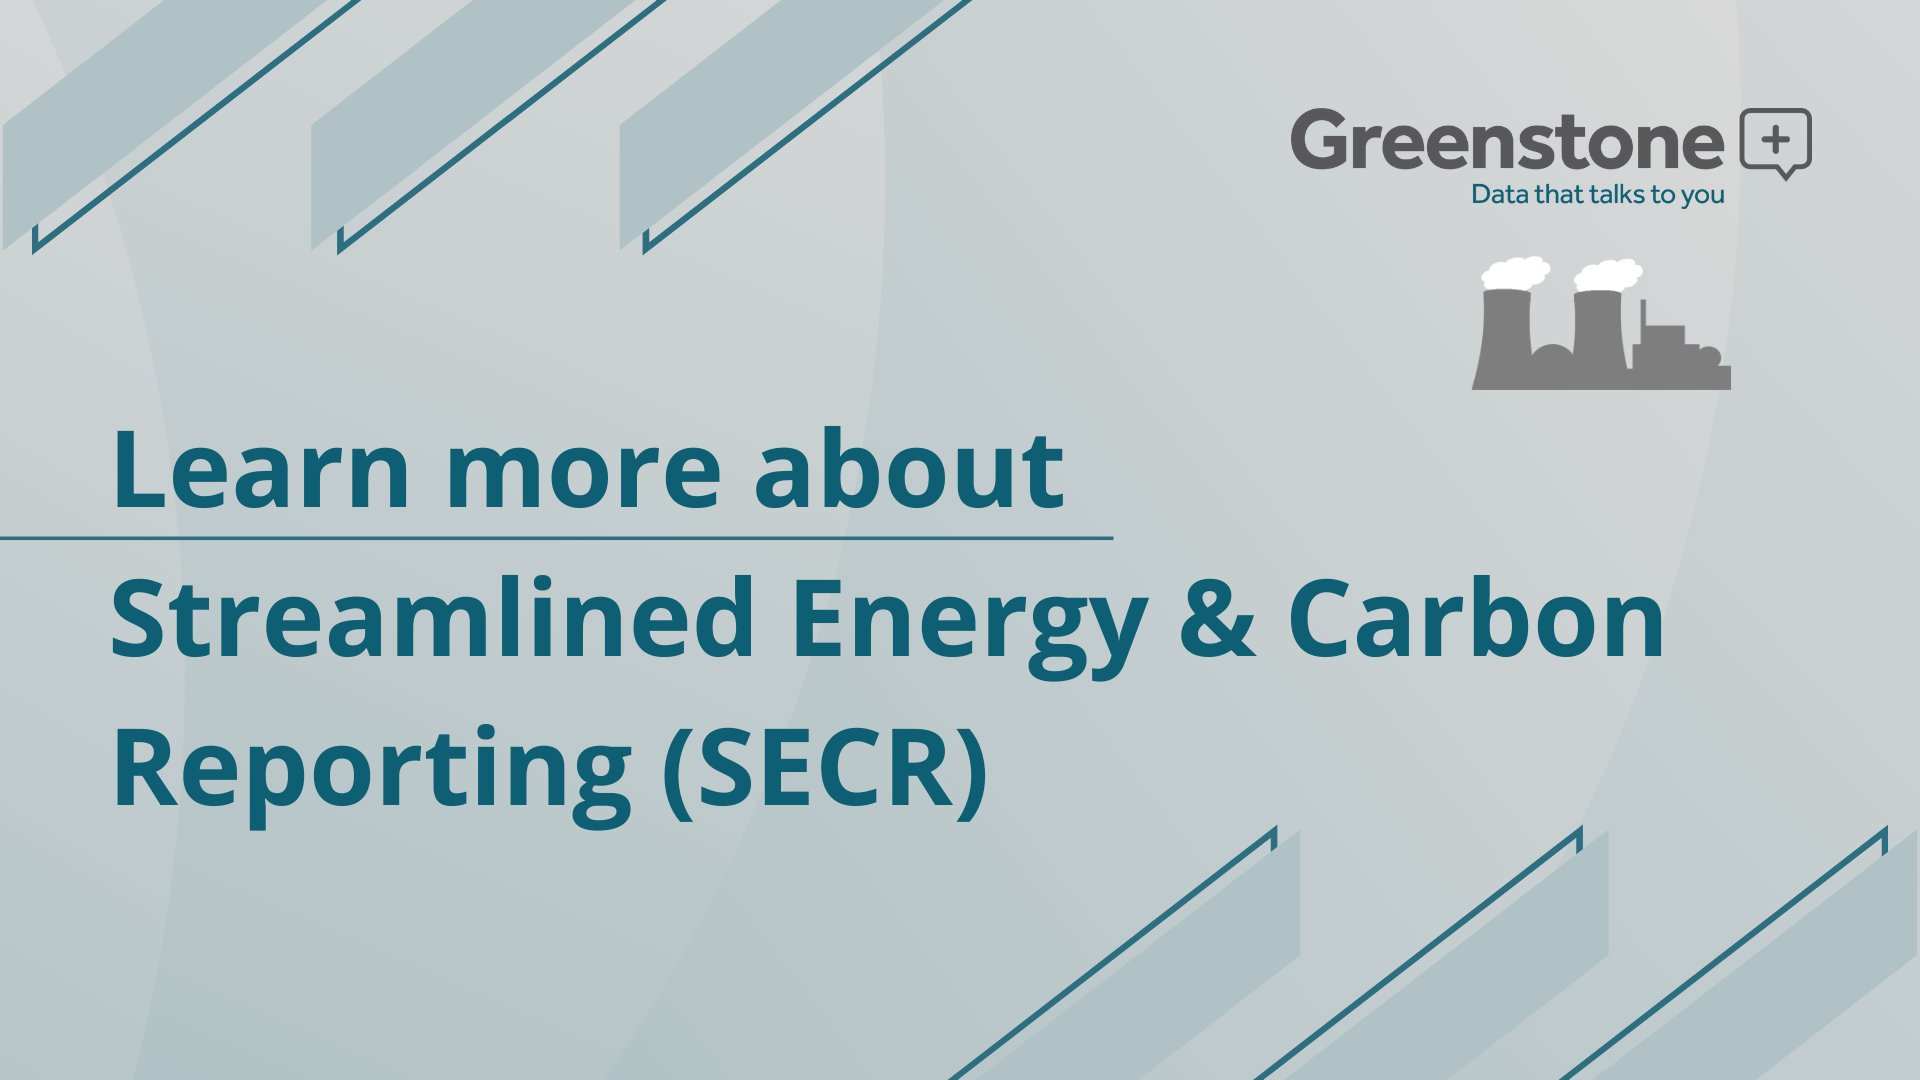 Greenstone & Streamlined Energy & Carbon Reporting (SECR)